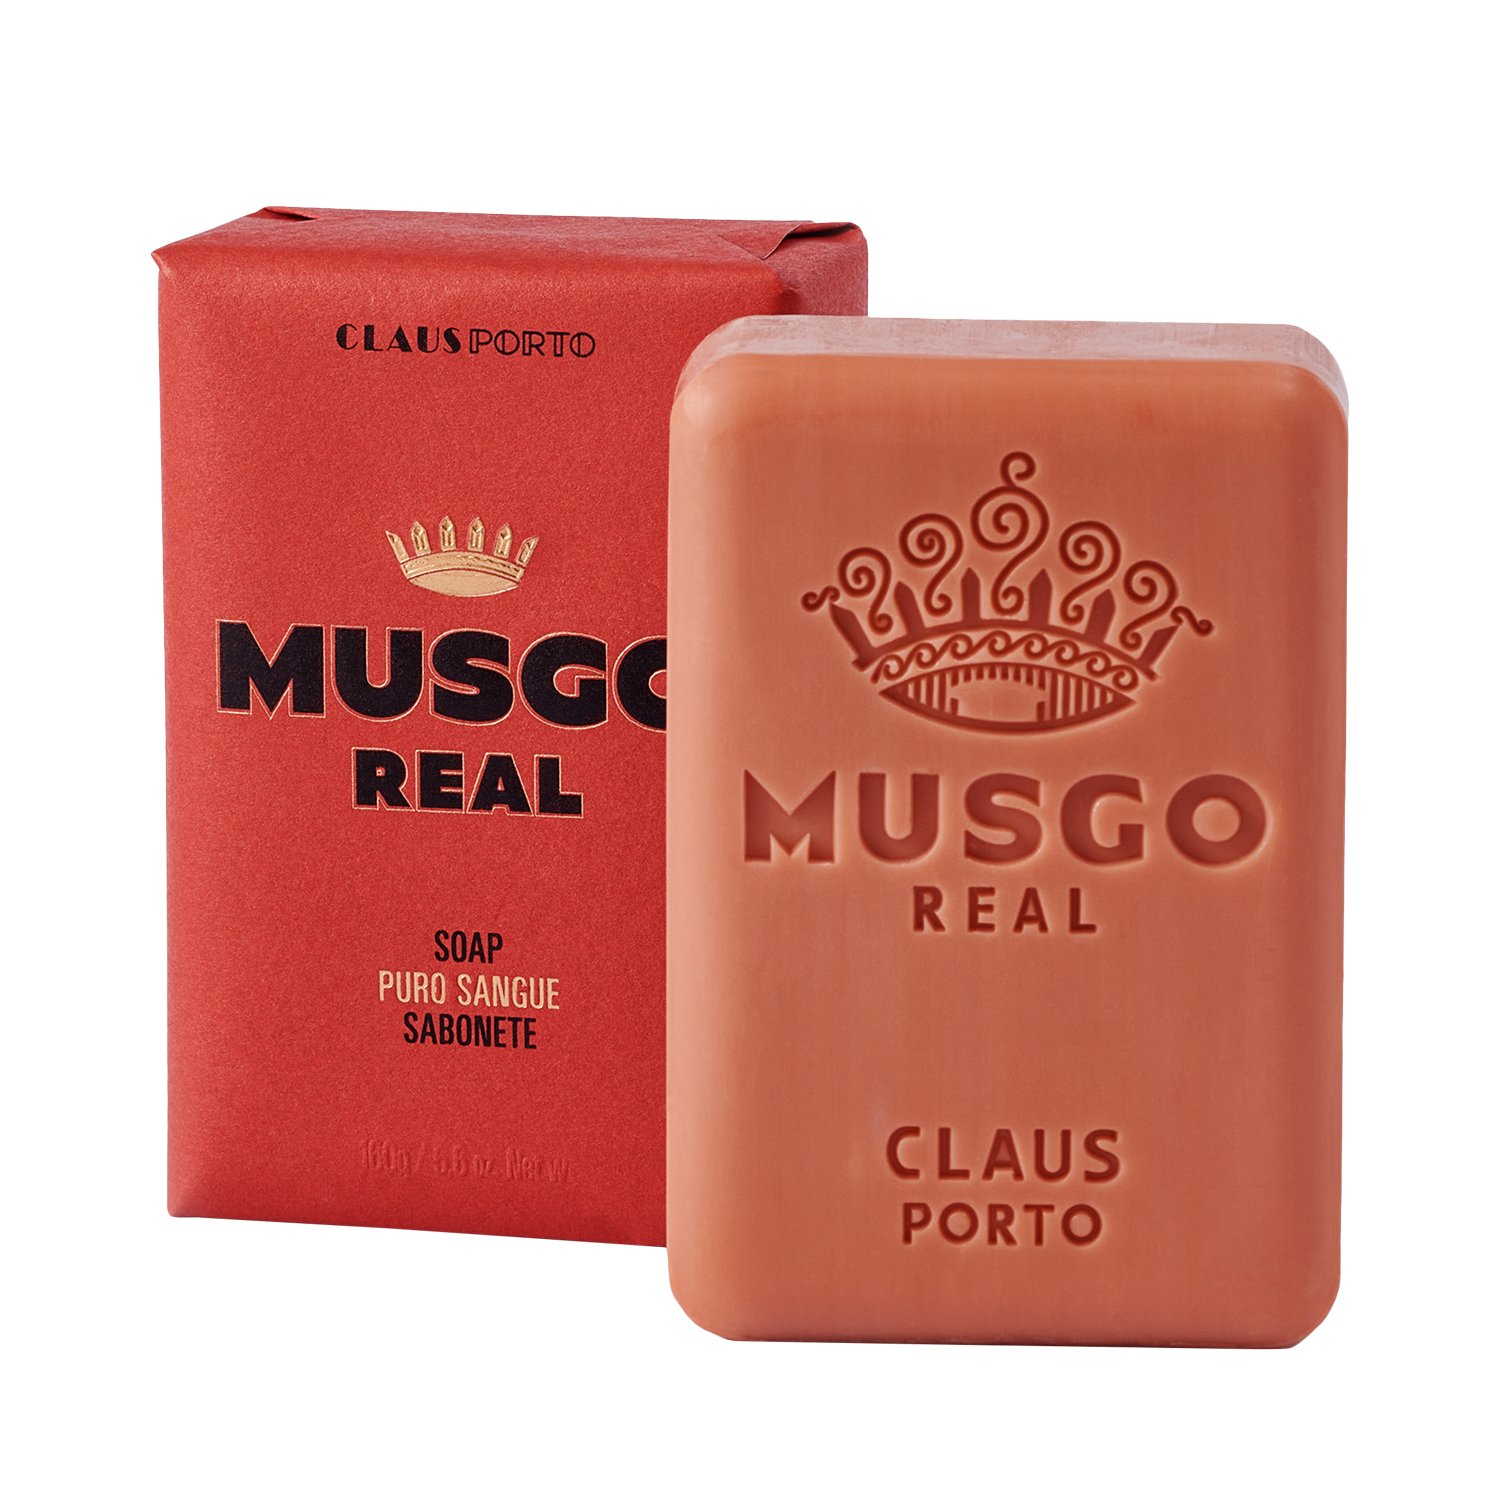 Musgo Real - Soap - Puro Sangue - Körperseife